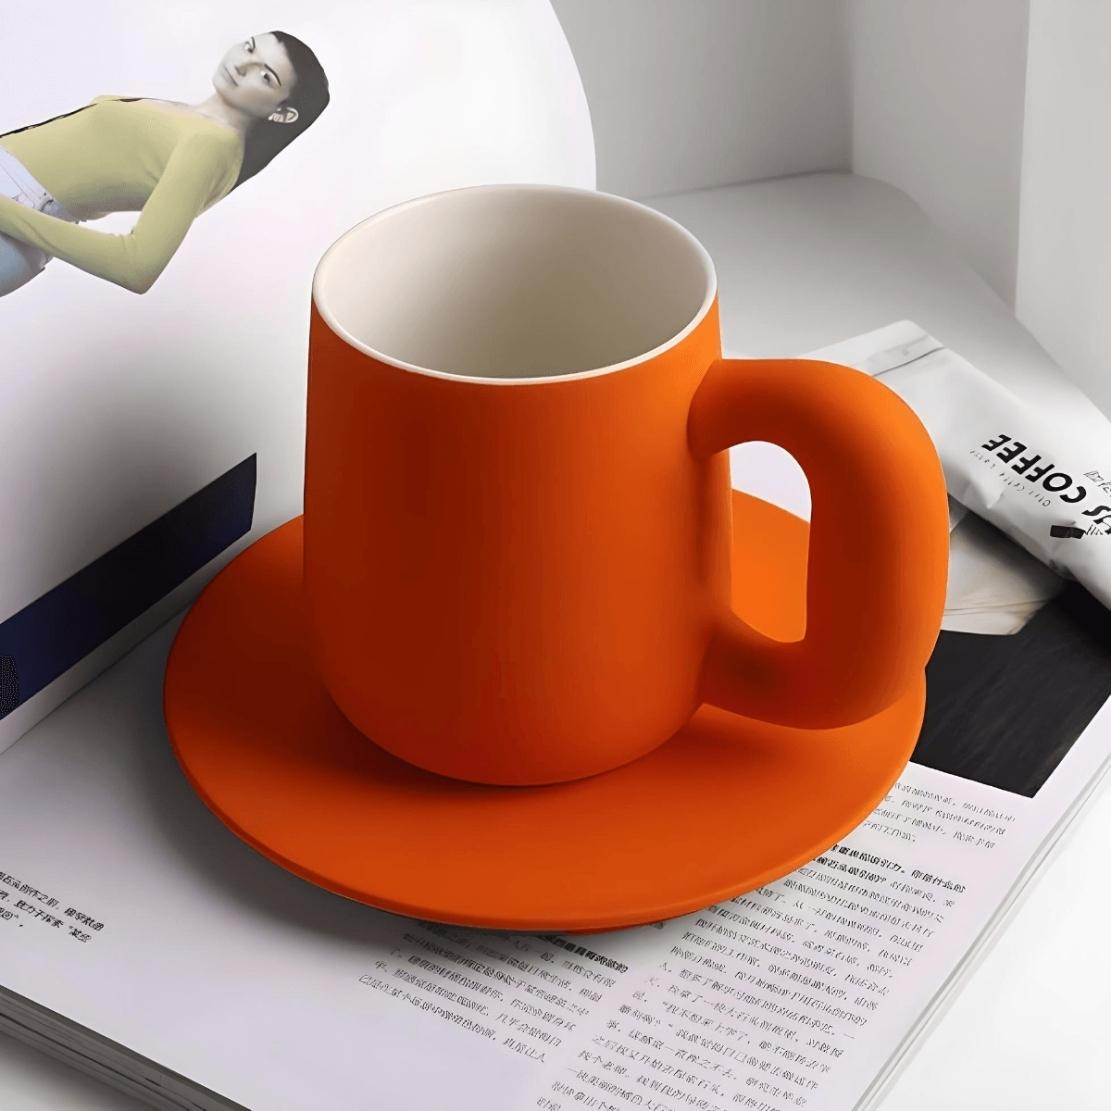 Orange ceramic coffee mug with saucer